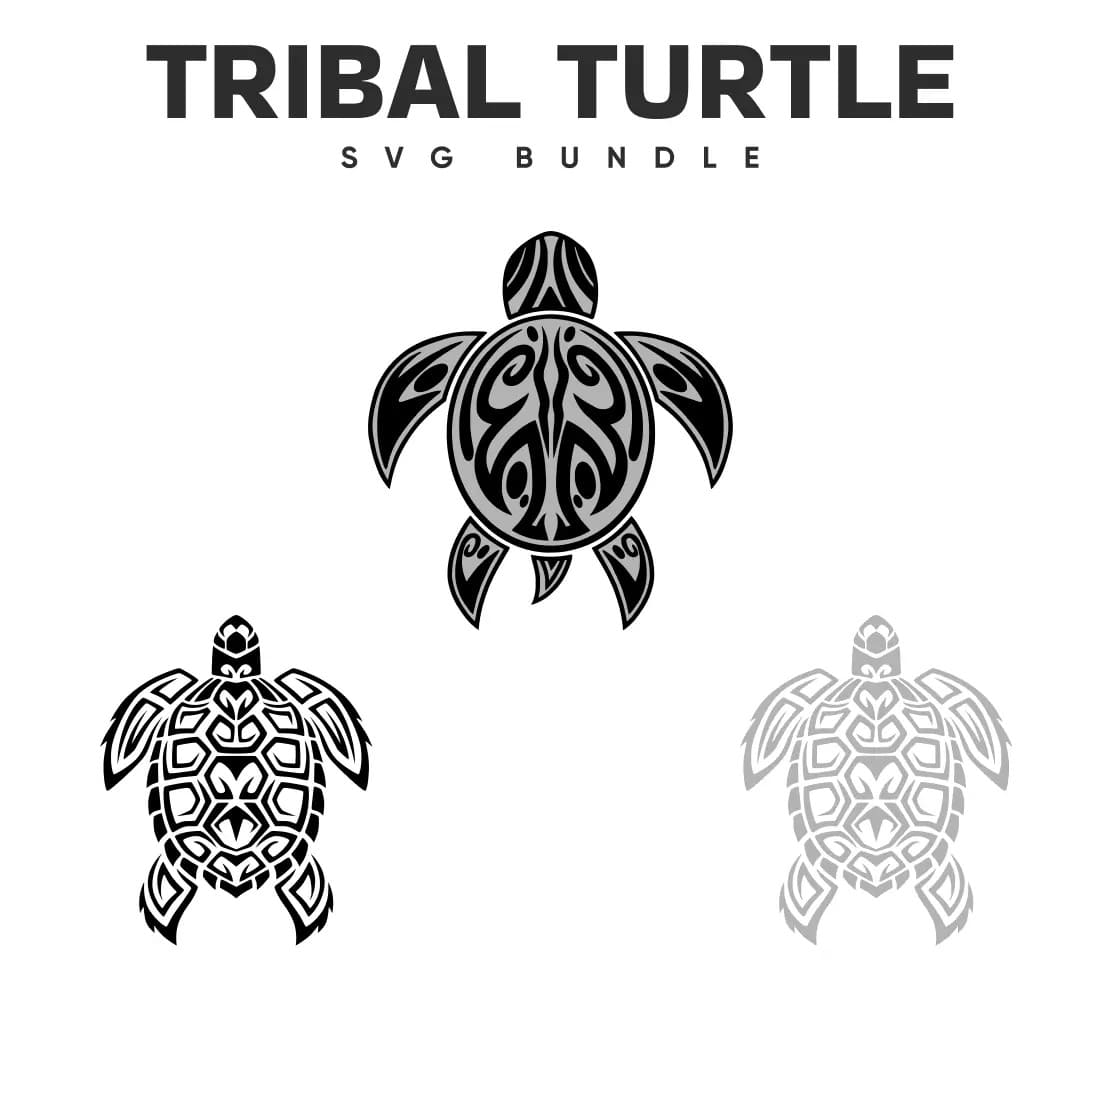 Tribal turtle svg bundle.